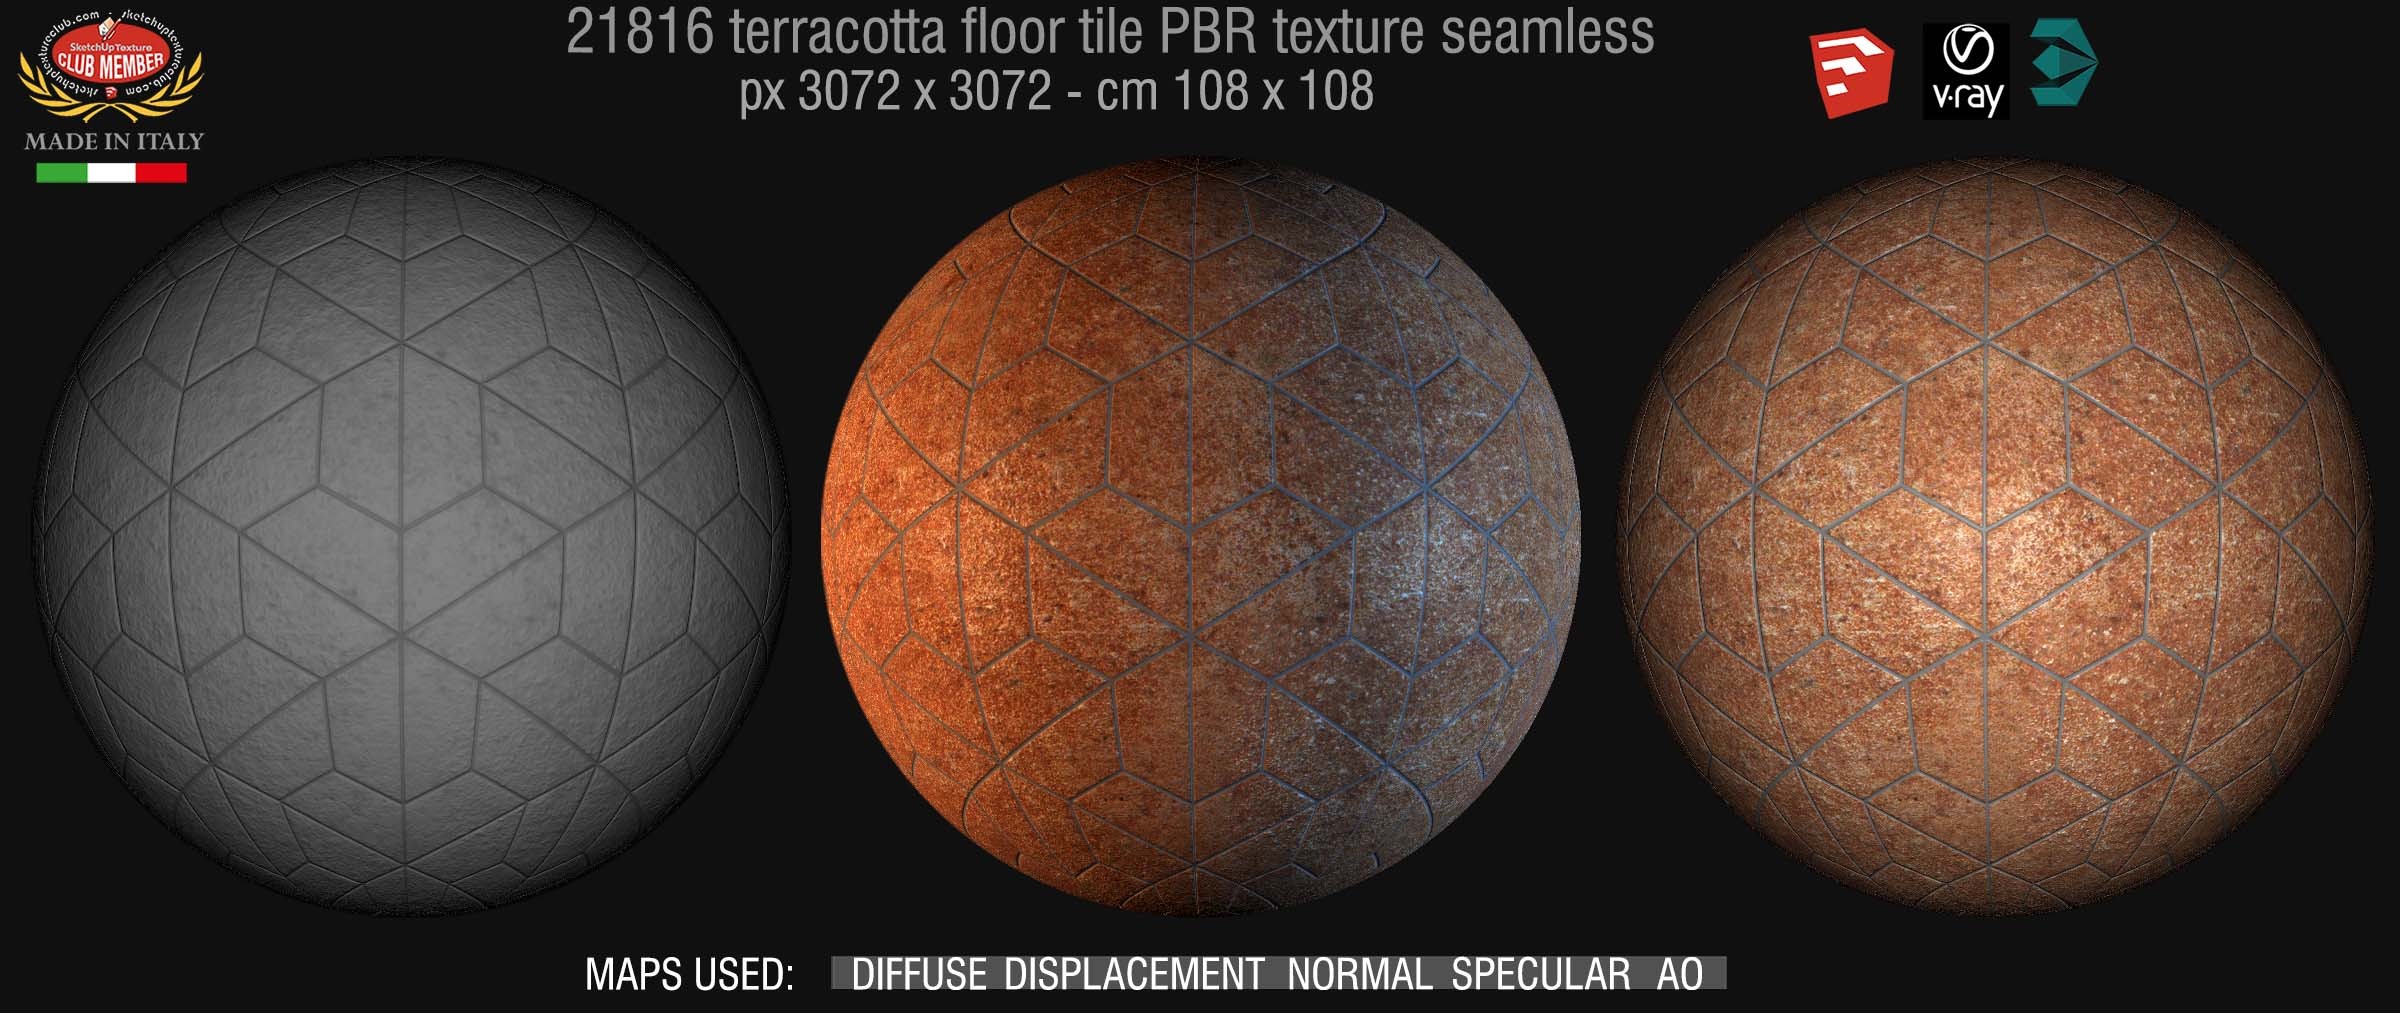 21816 terracotta floor tile PBR texture seamless DEMO